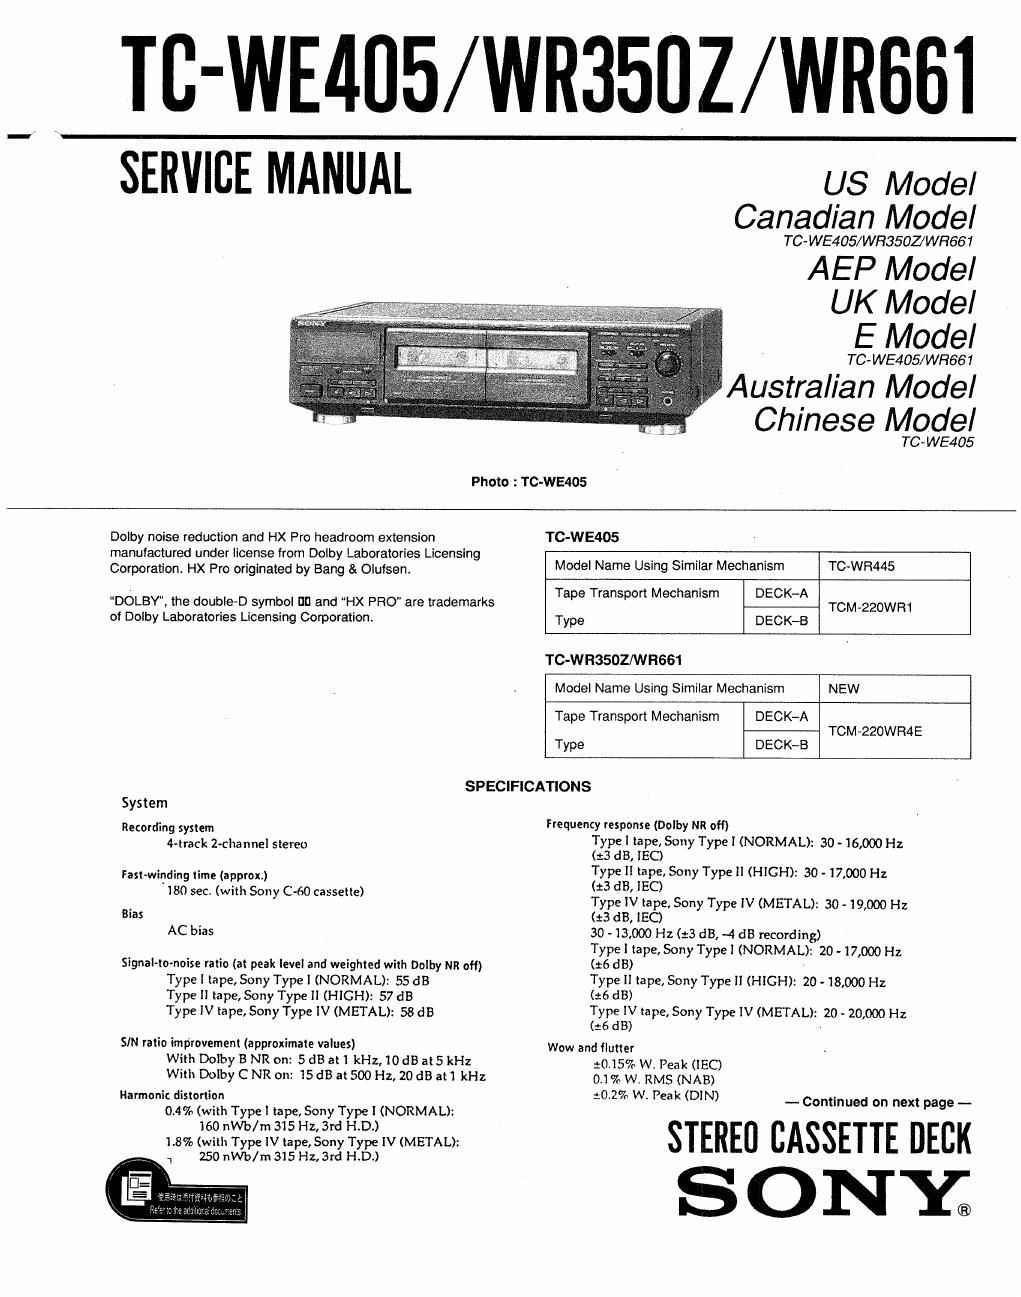 sony tc wr 661 service manual